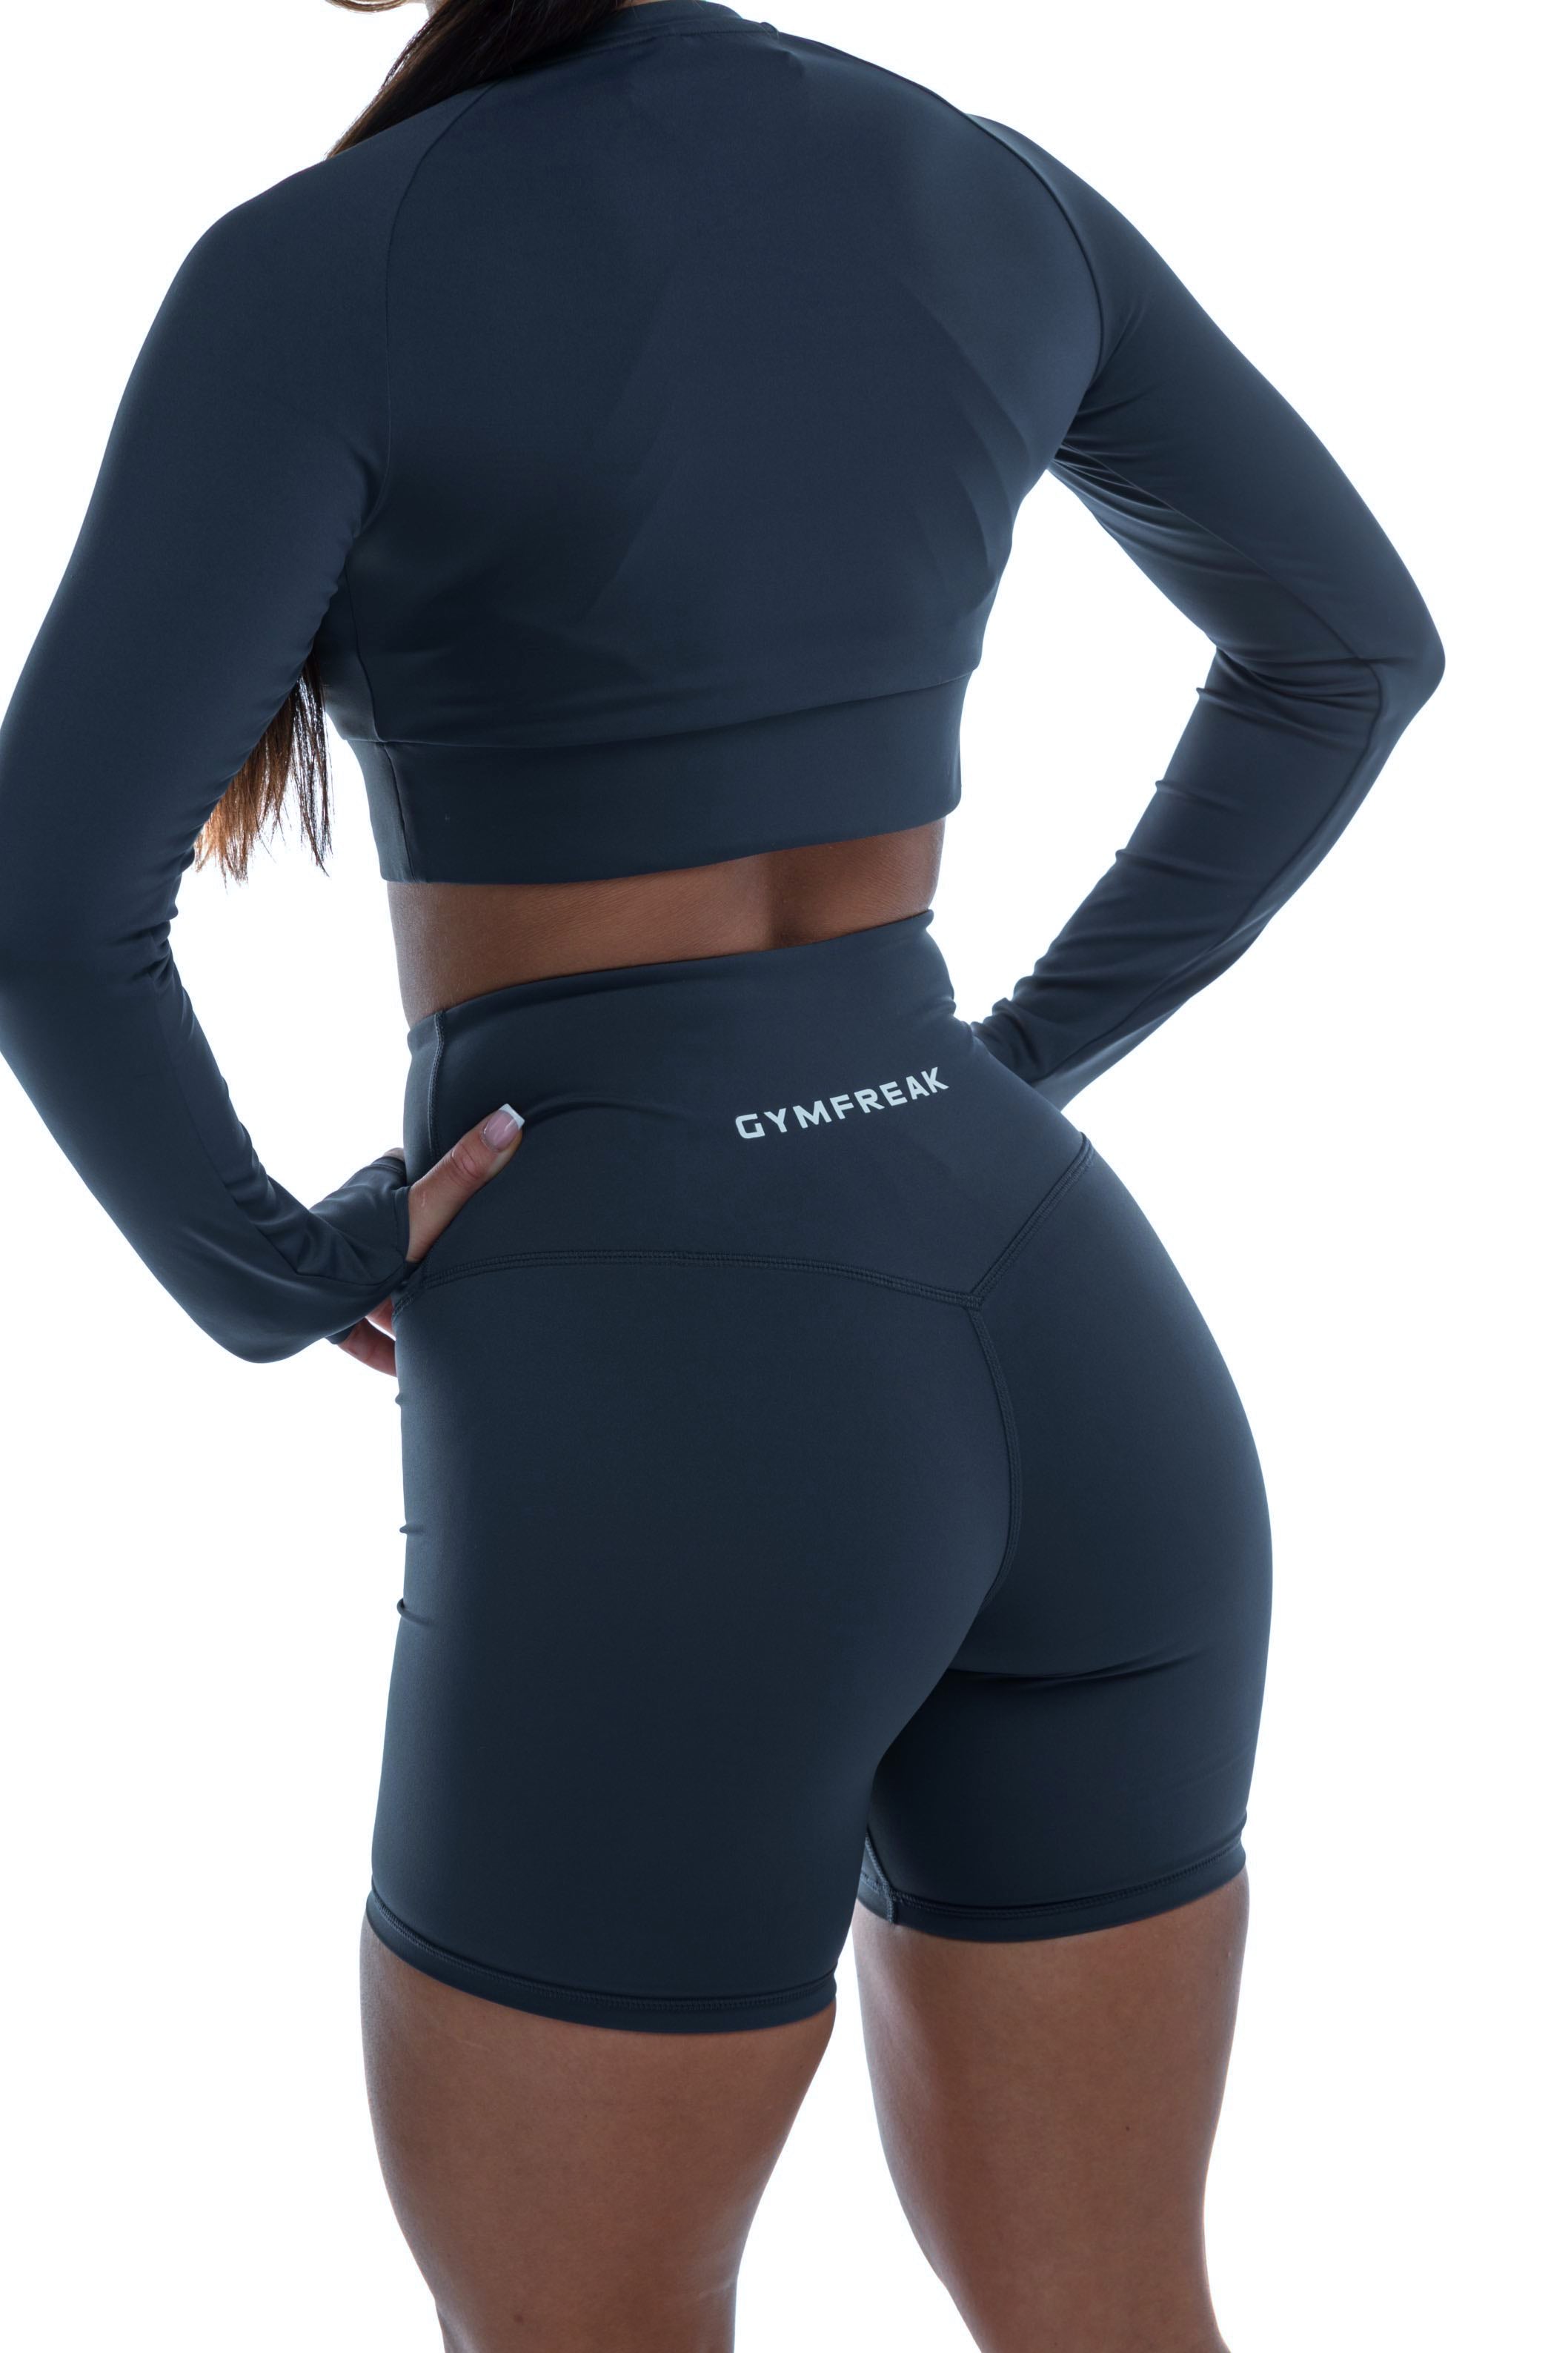 GymFreak Women's Vision Shorts - 6 inch Blue